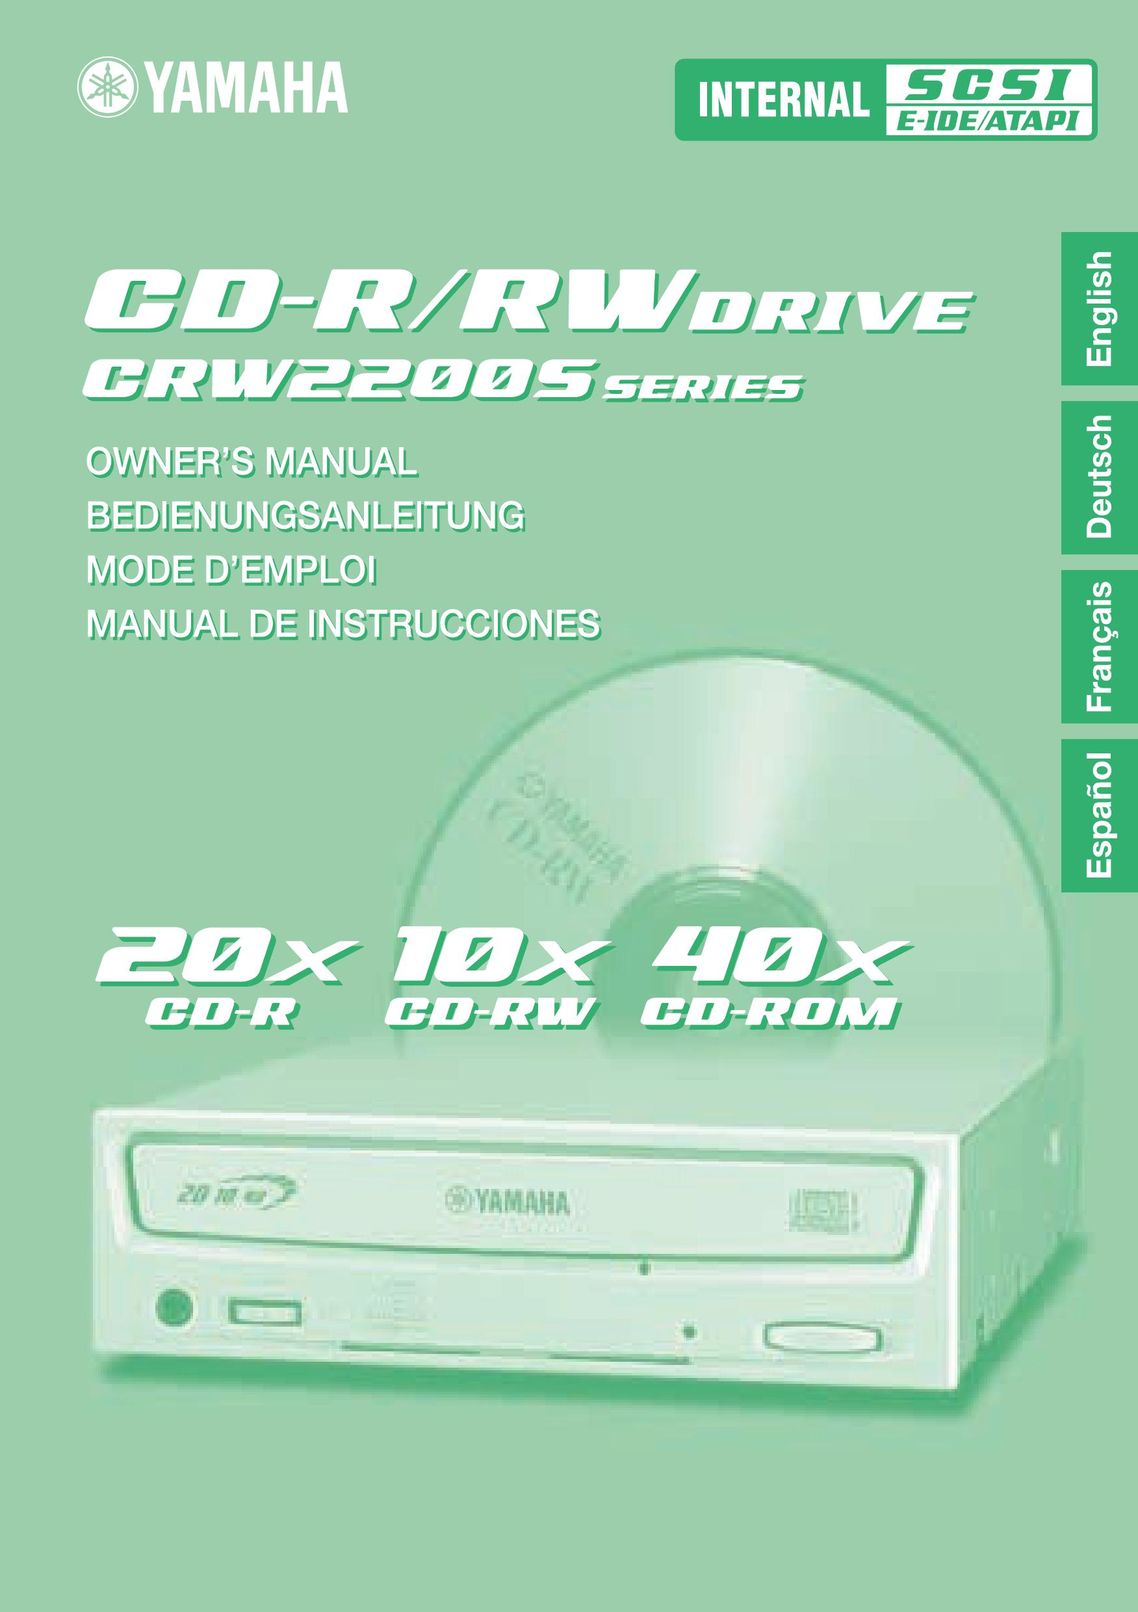 Yamaha CRW2200S Personal Computer User Manual